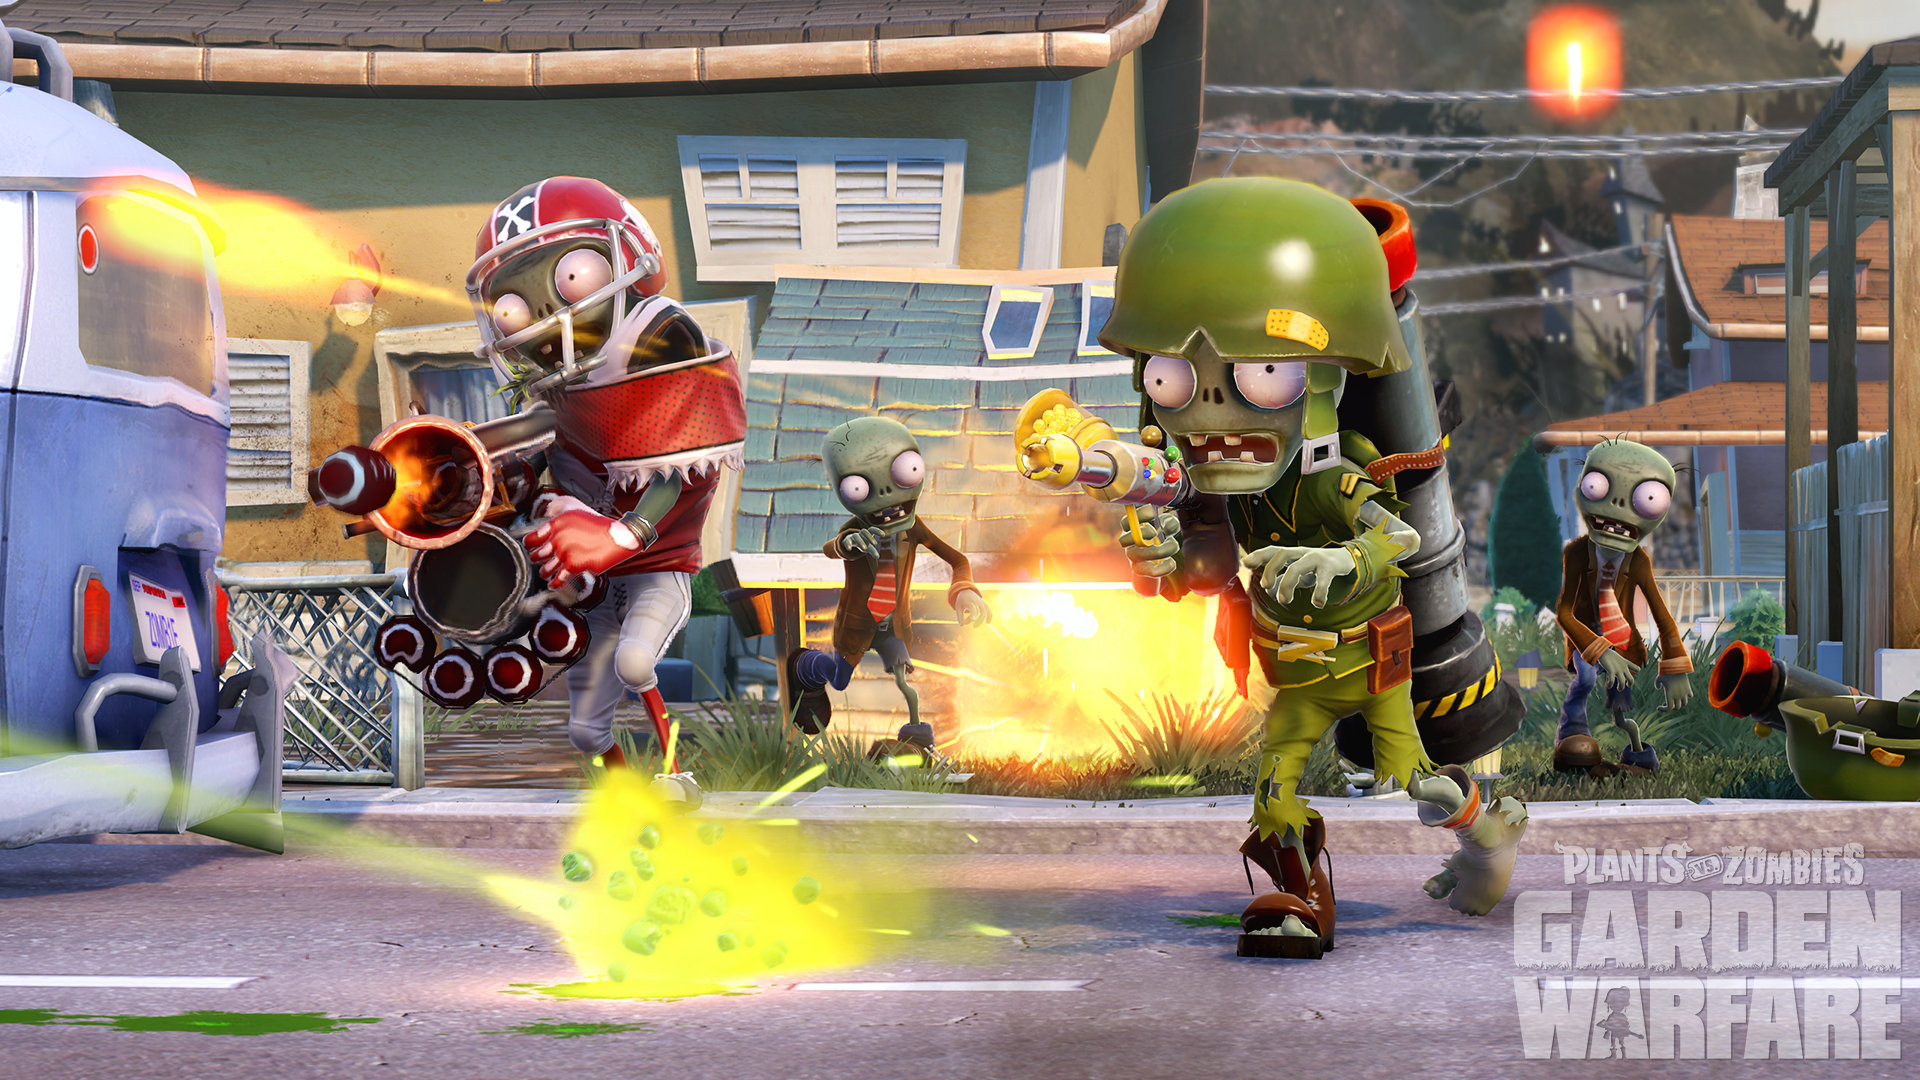 August 19 - Plants vs. Zombies: Garden Warfare (PS4, PS3)